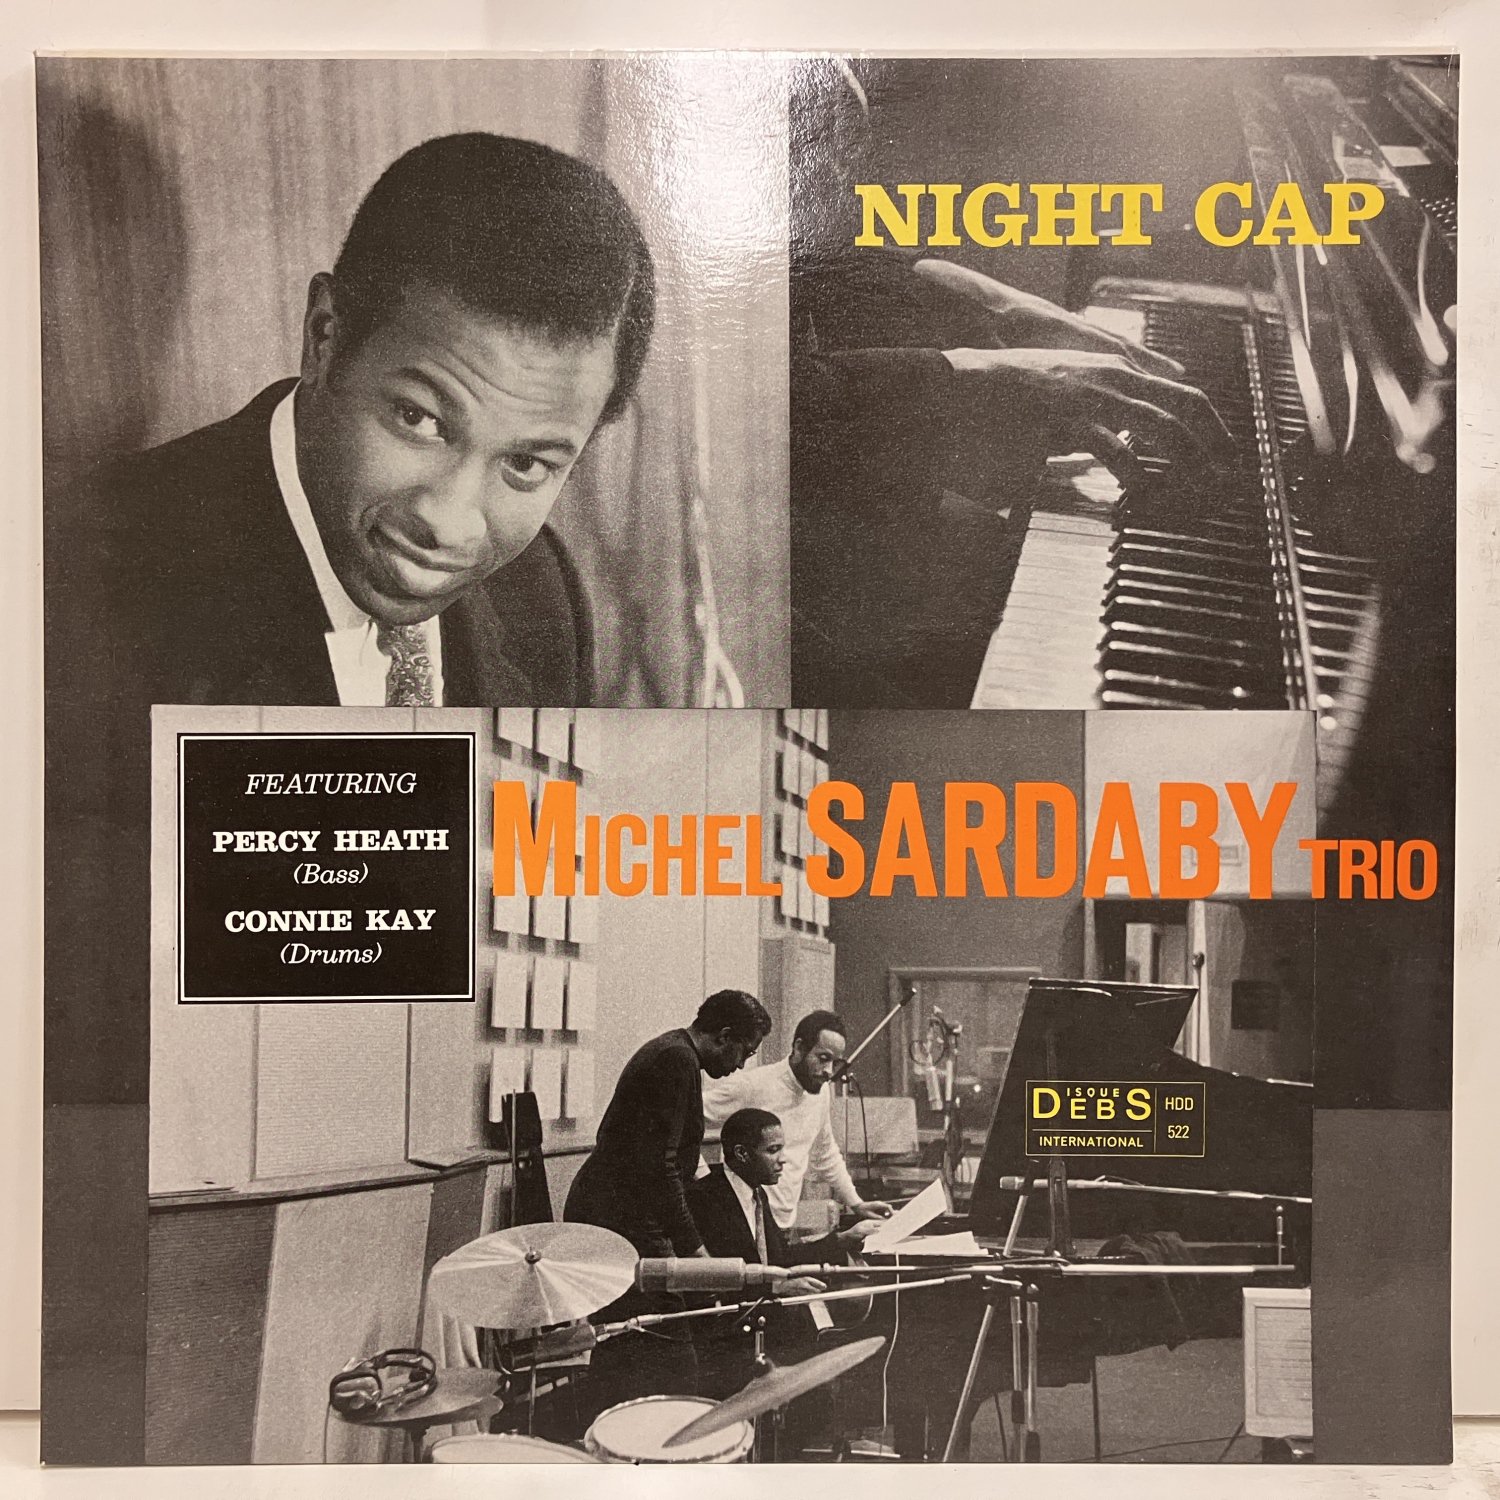 Michel Sardaby / Night Cap Hdd522 :通販 ジャズ レコード 買取 Bamboo Music